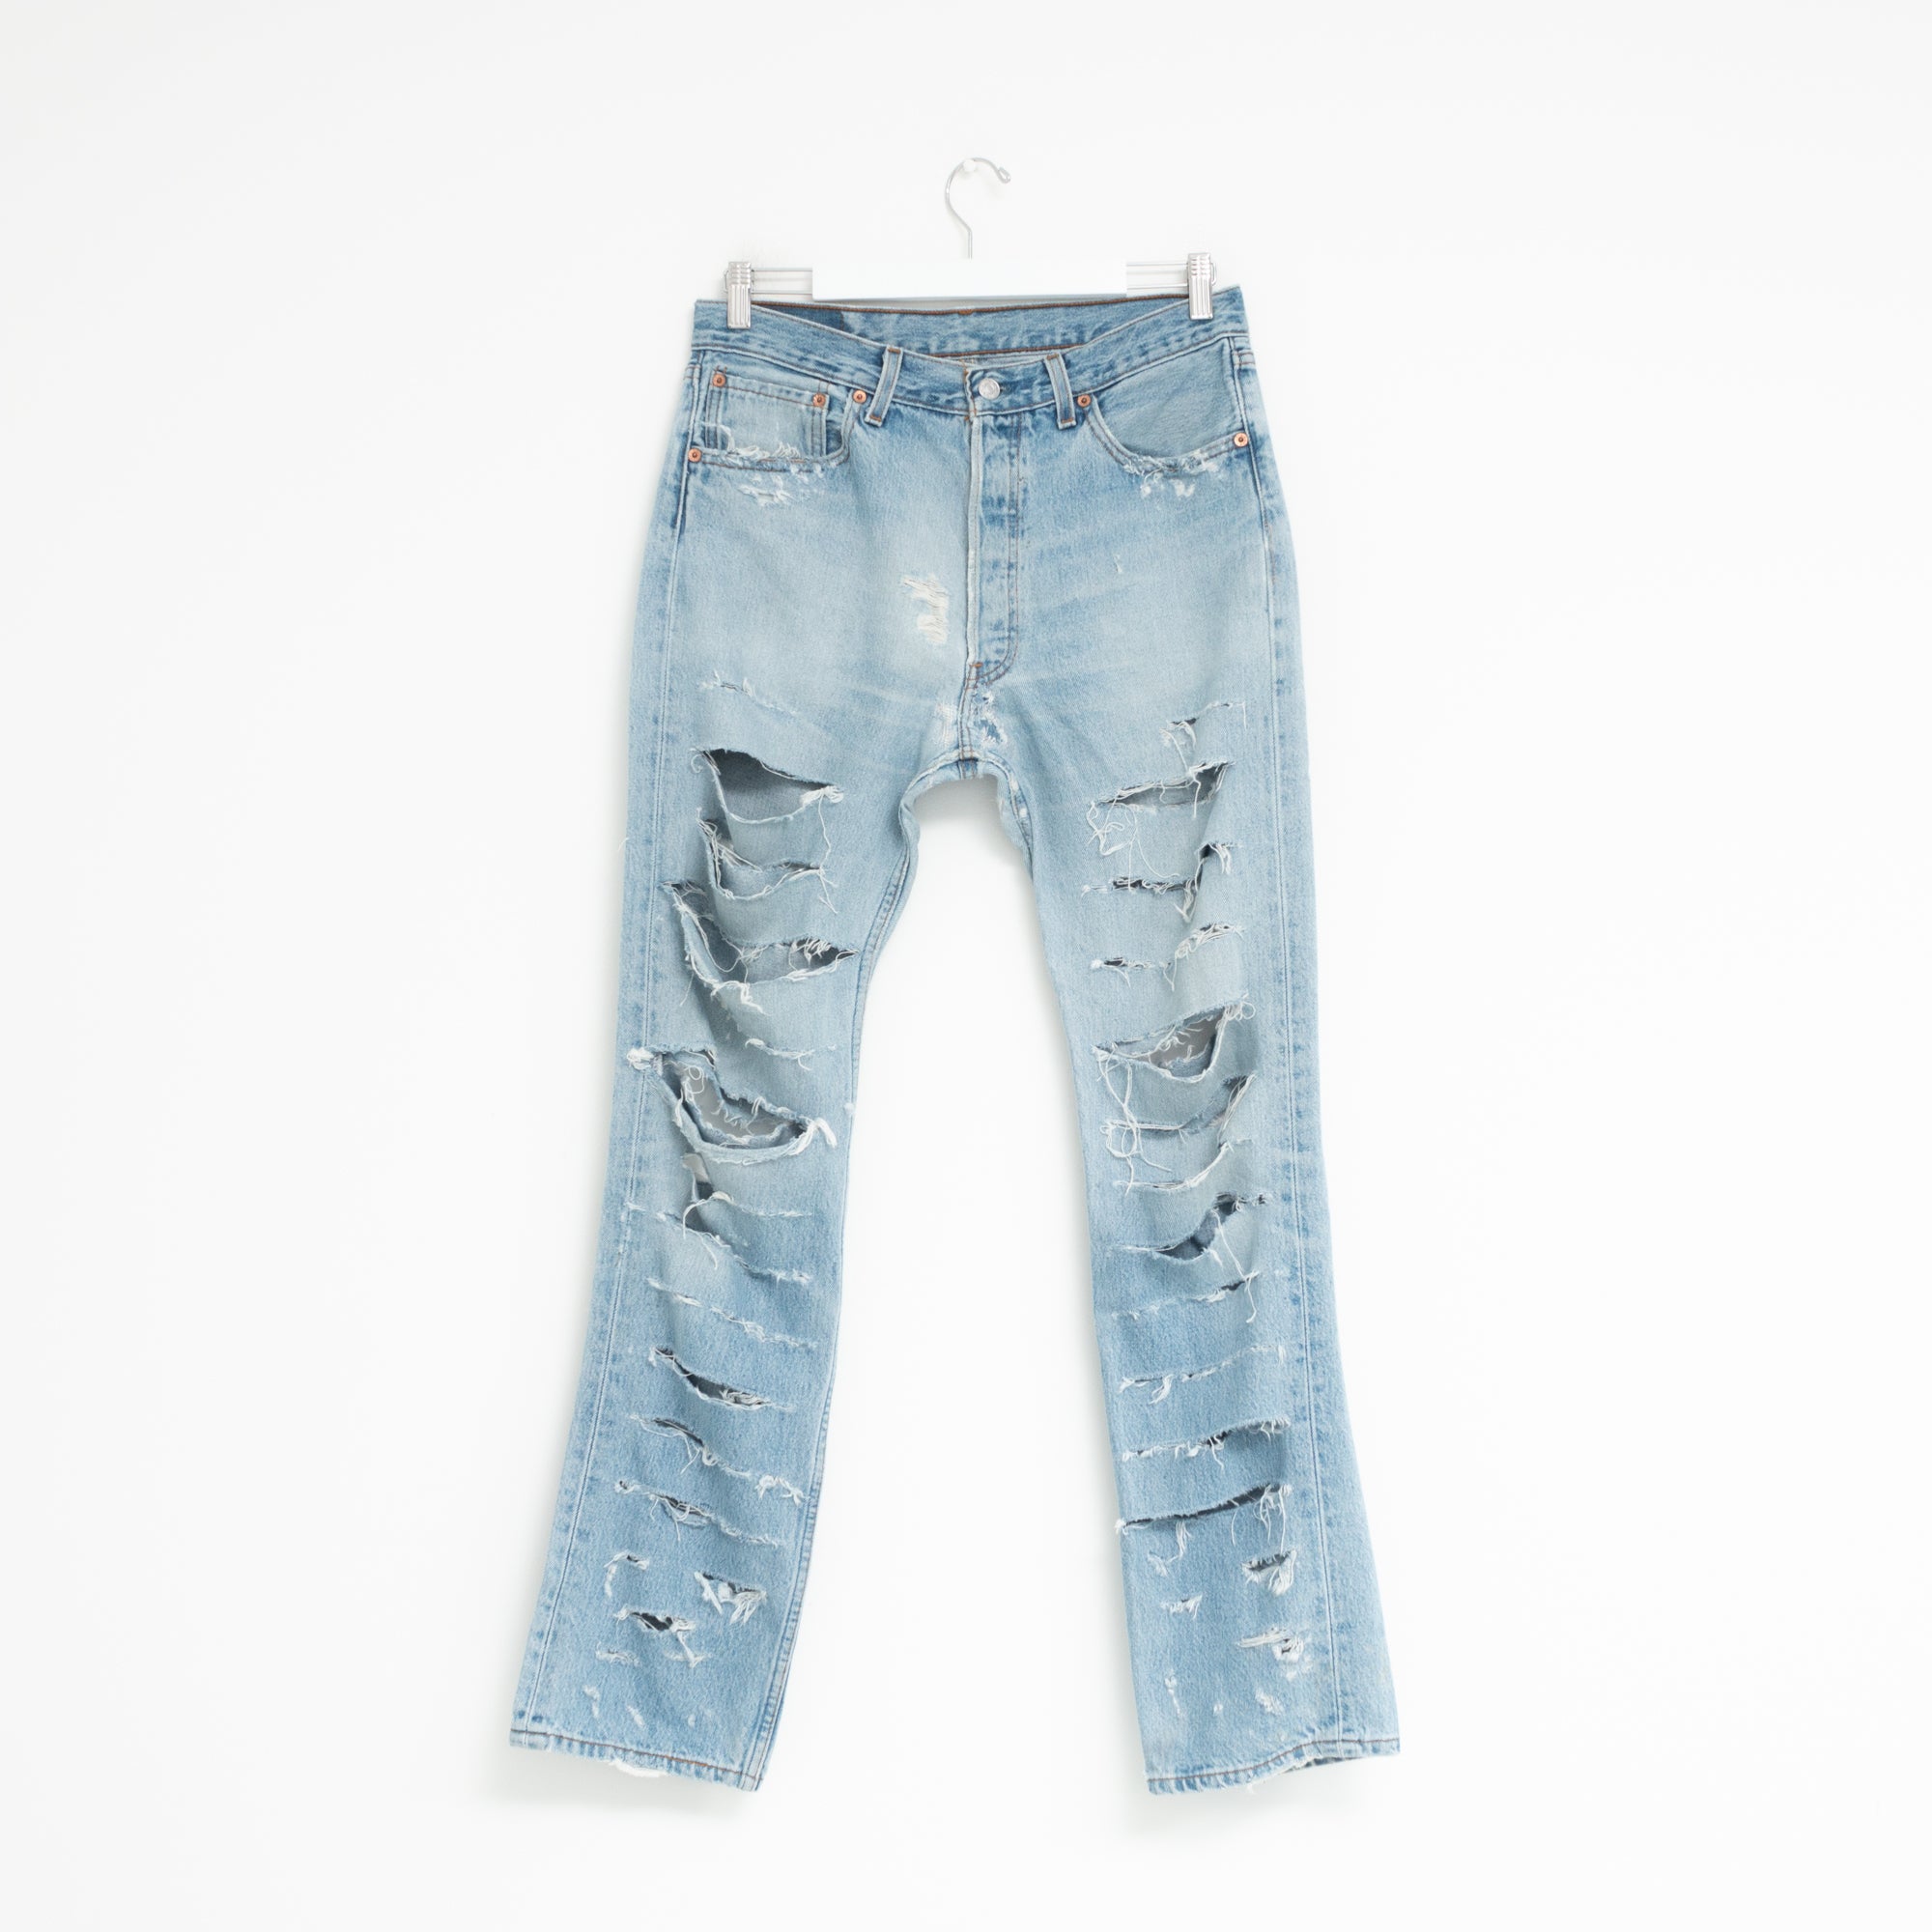 "THRASHER" Jeans W33 L33